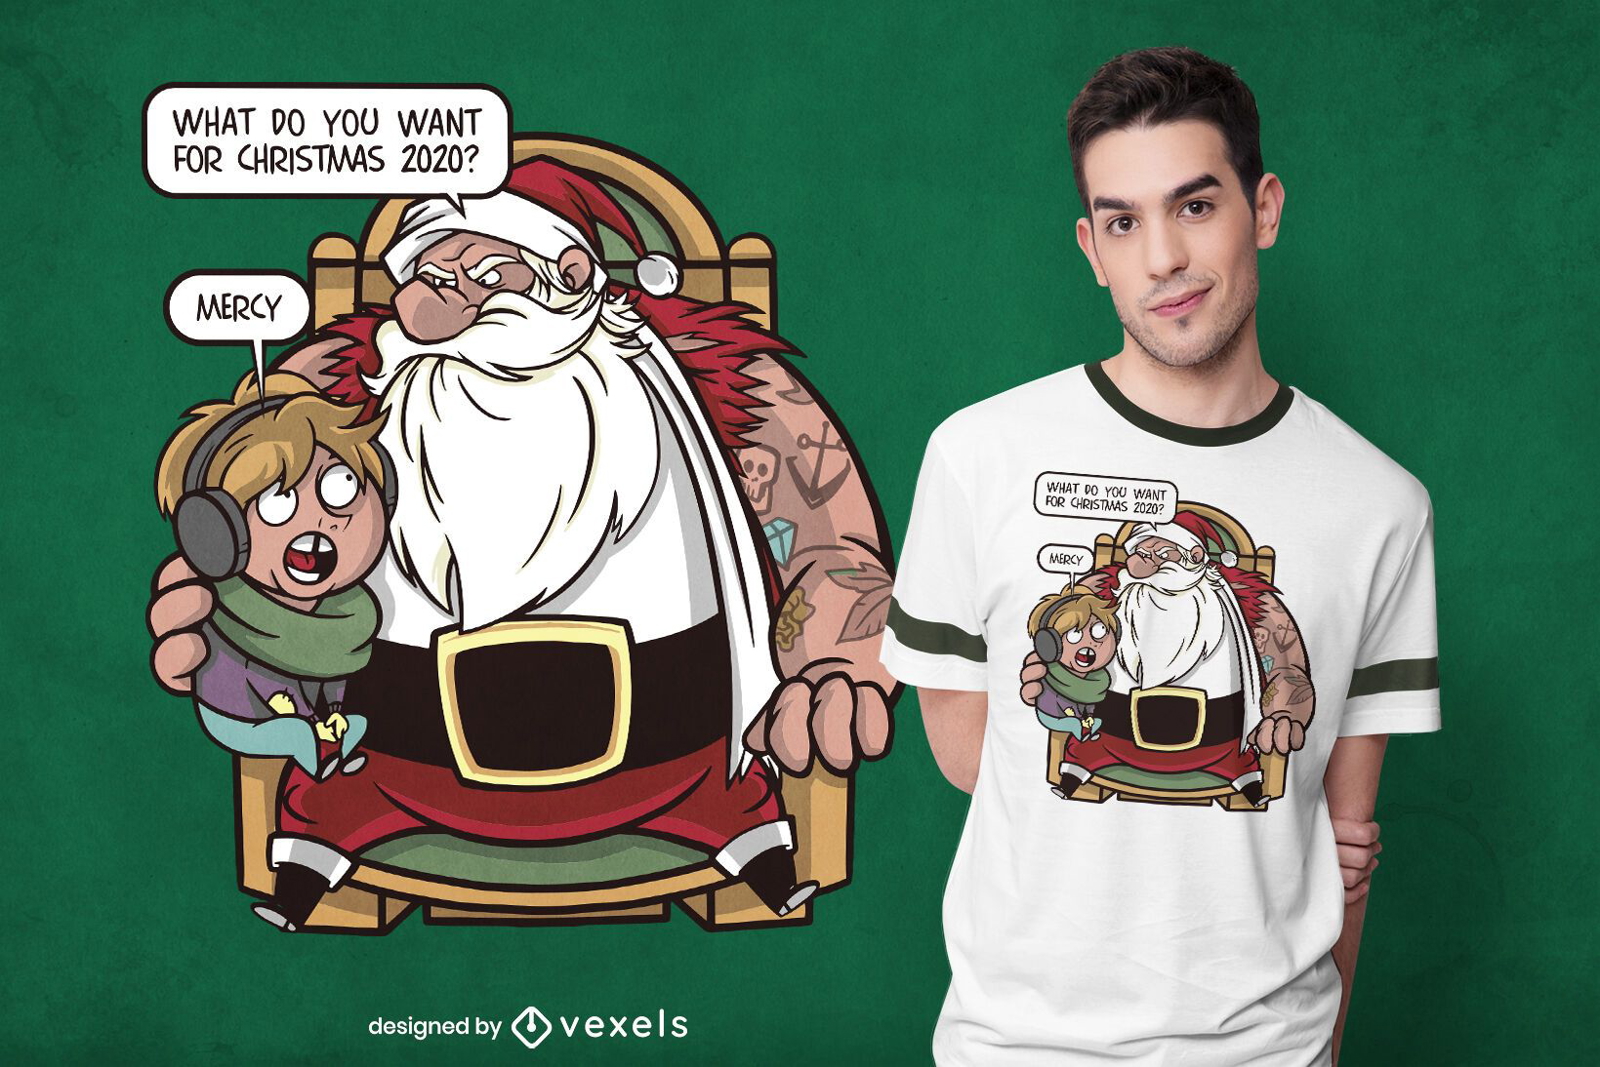 Diseño de camiseta navideña misericordiosa